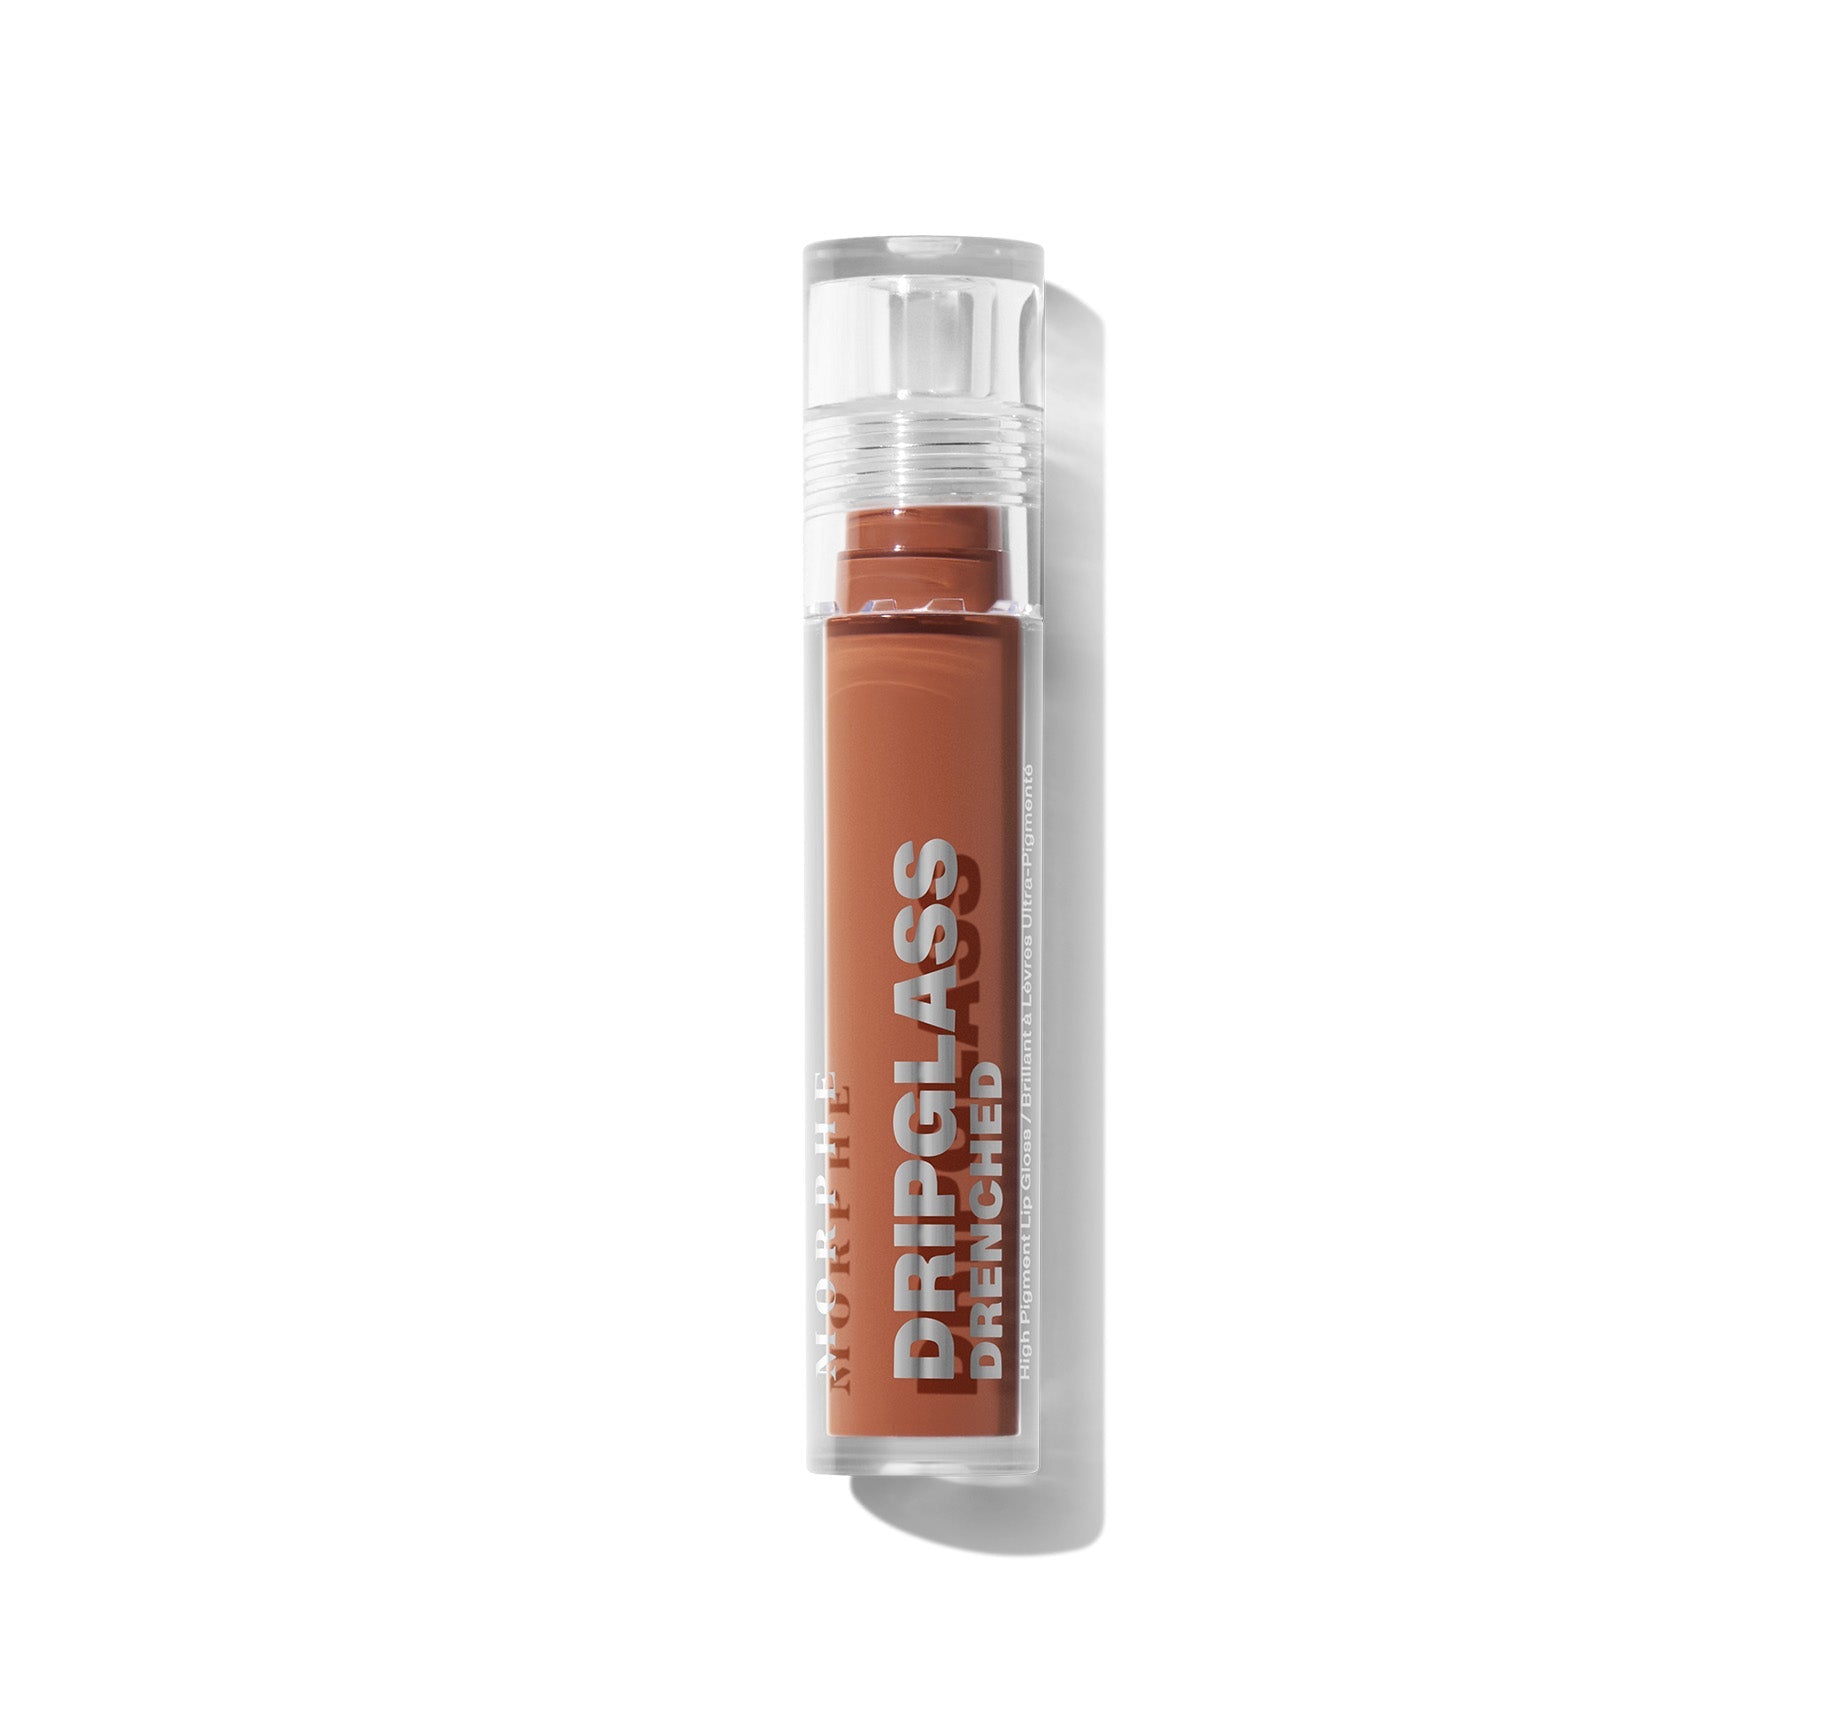 Shop Pigment Powder For Lip Gloss online